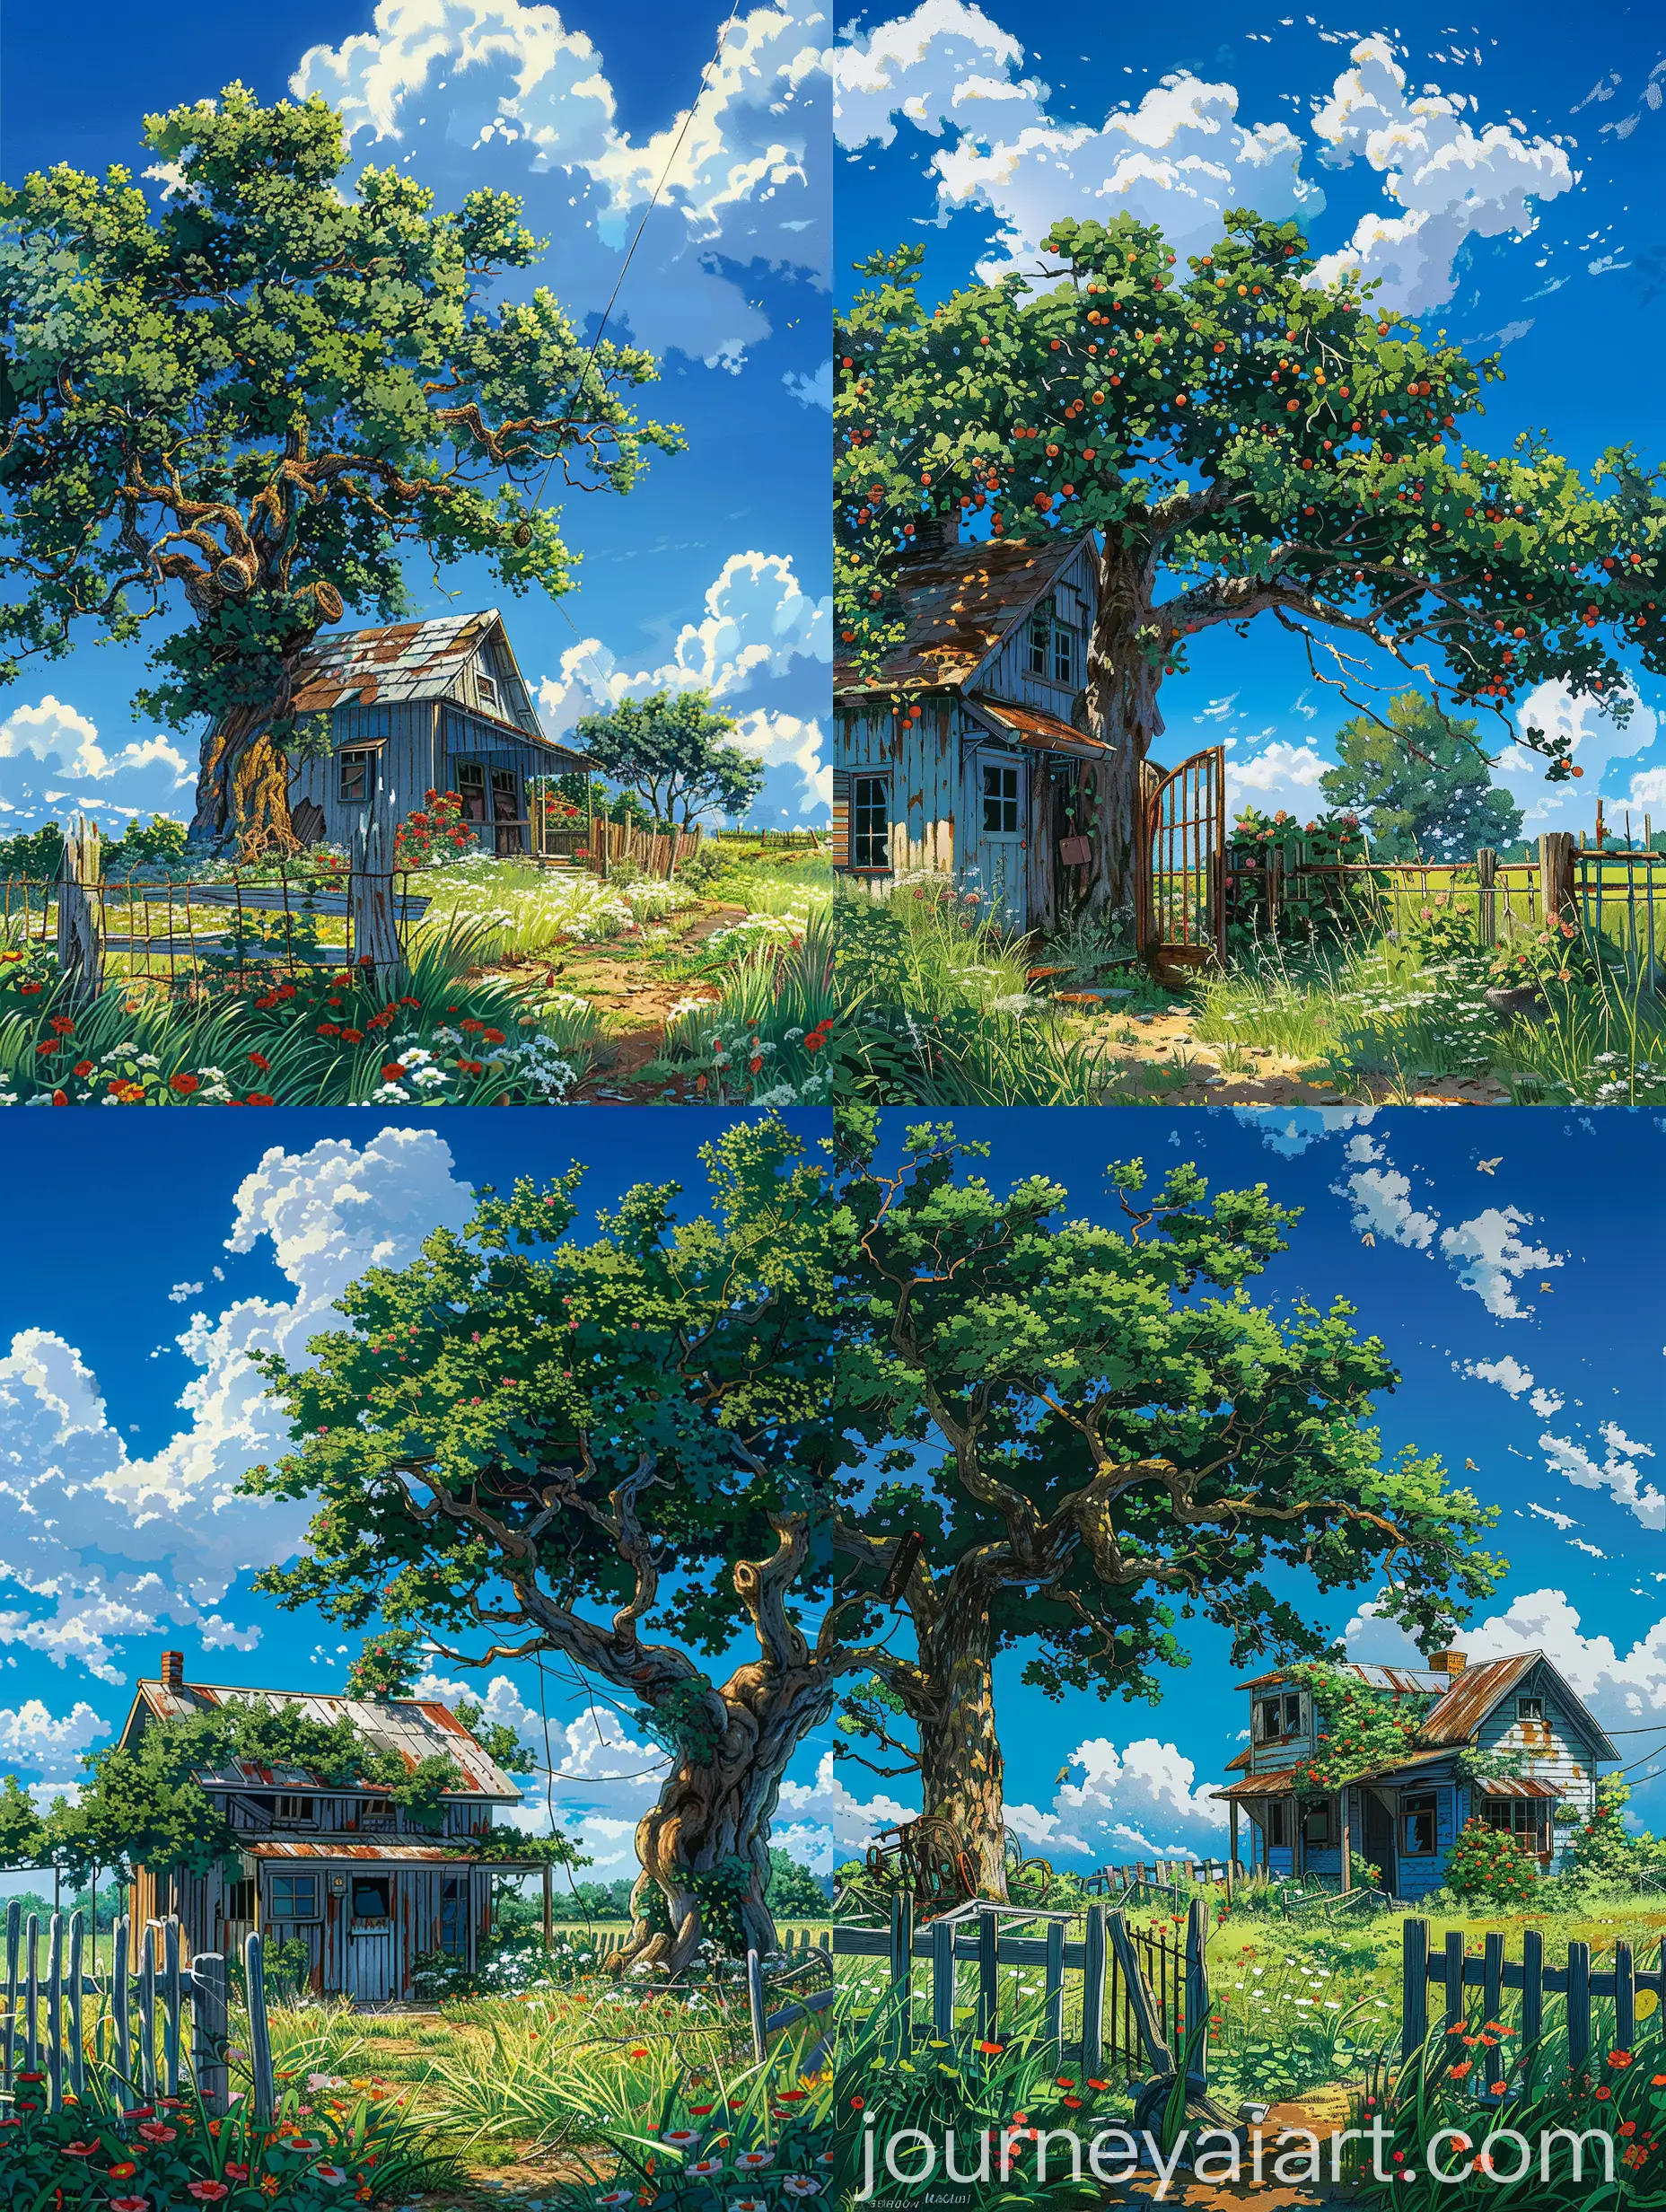 Abandoned-House-Overgrown-with-Nature-under-a-Blue-Sky-Makoto-Shinkai-and-Studio-Ghibli-Inspired-Anime-Art